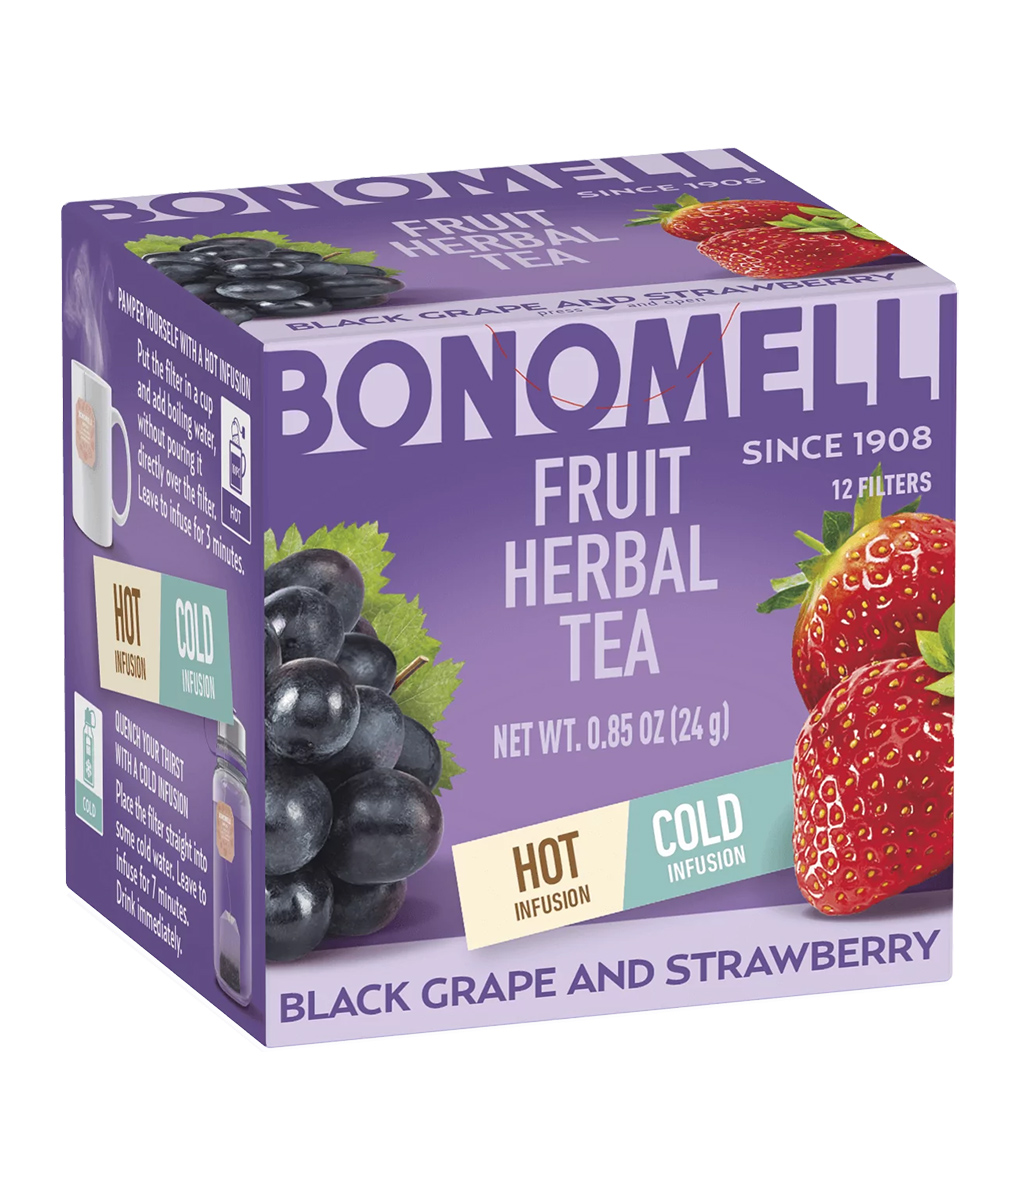 Bonomelli Fruit Herbal Teas BLACK GRAPE AND STRAWBERRY